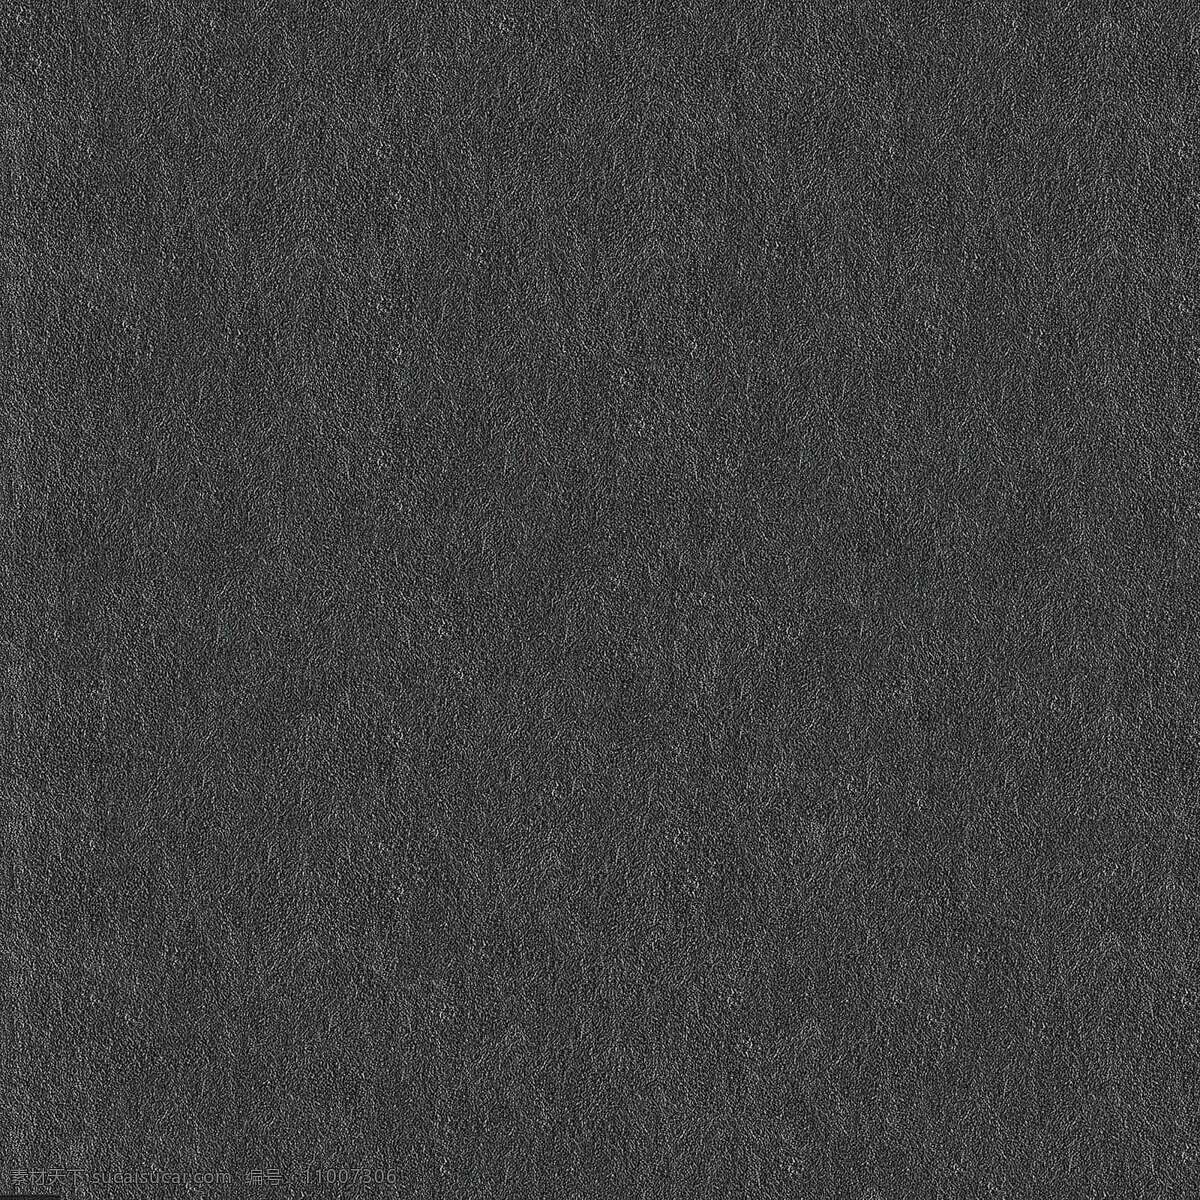 vray 地毯 材质 max9 斑马纹 布料 黑白纹理 无缝 有贴图 3d模型素材 材质贴图